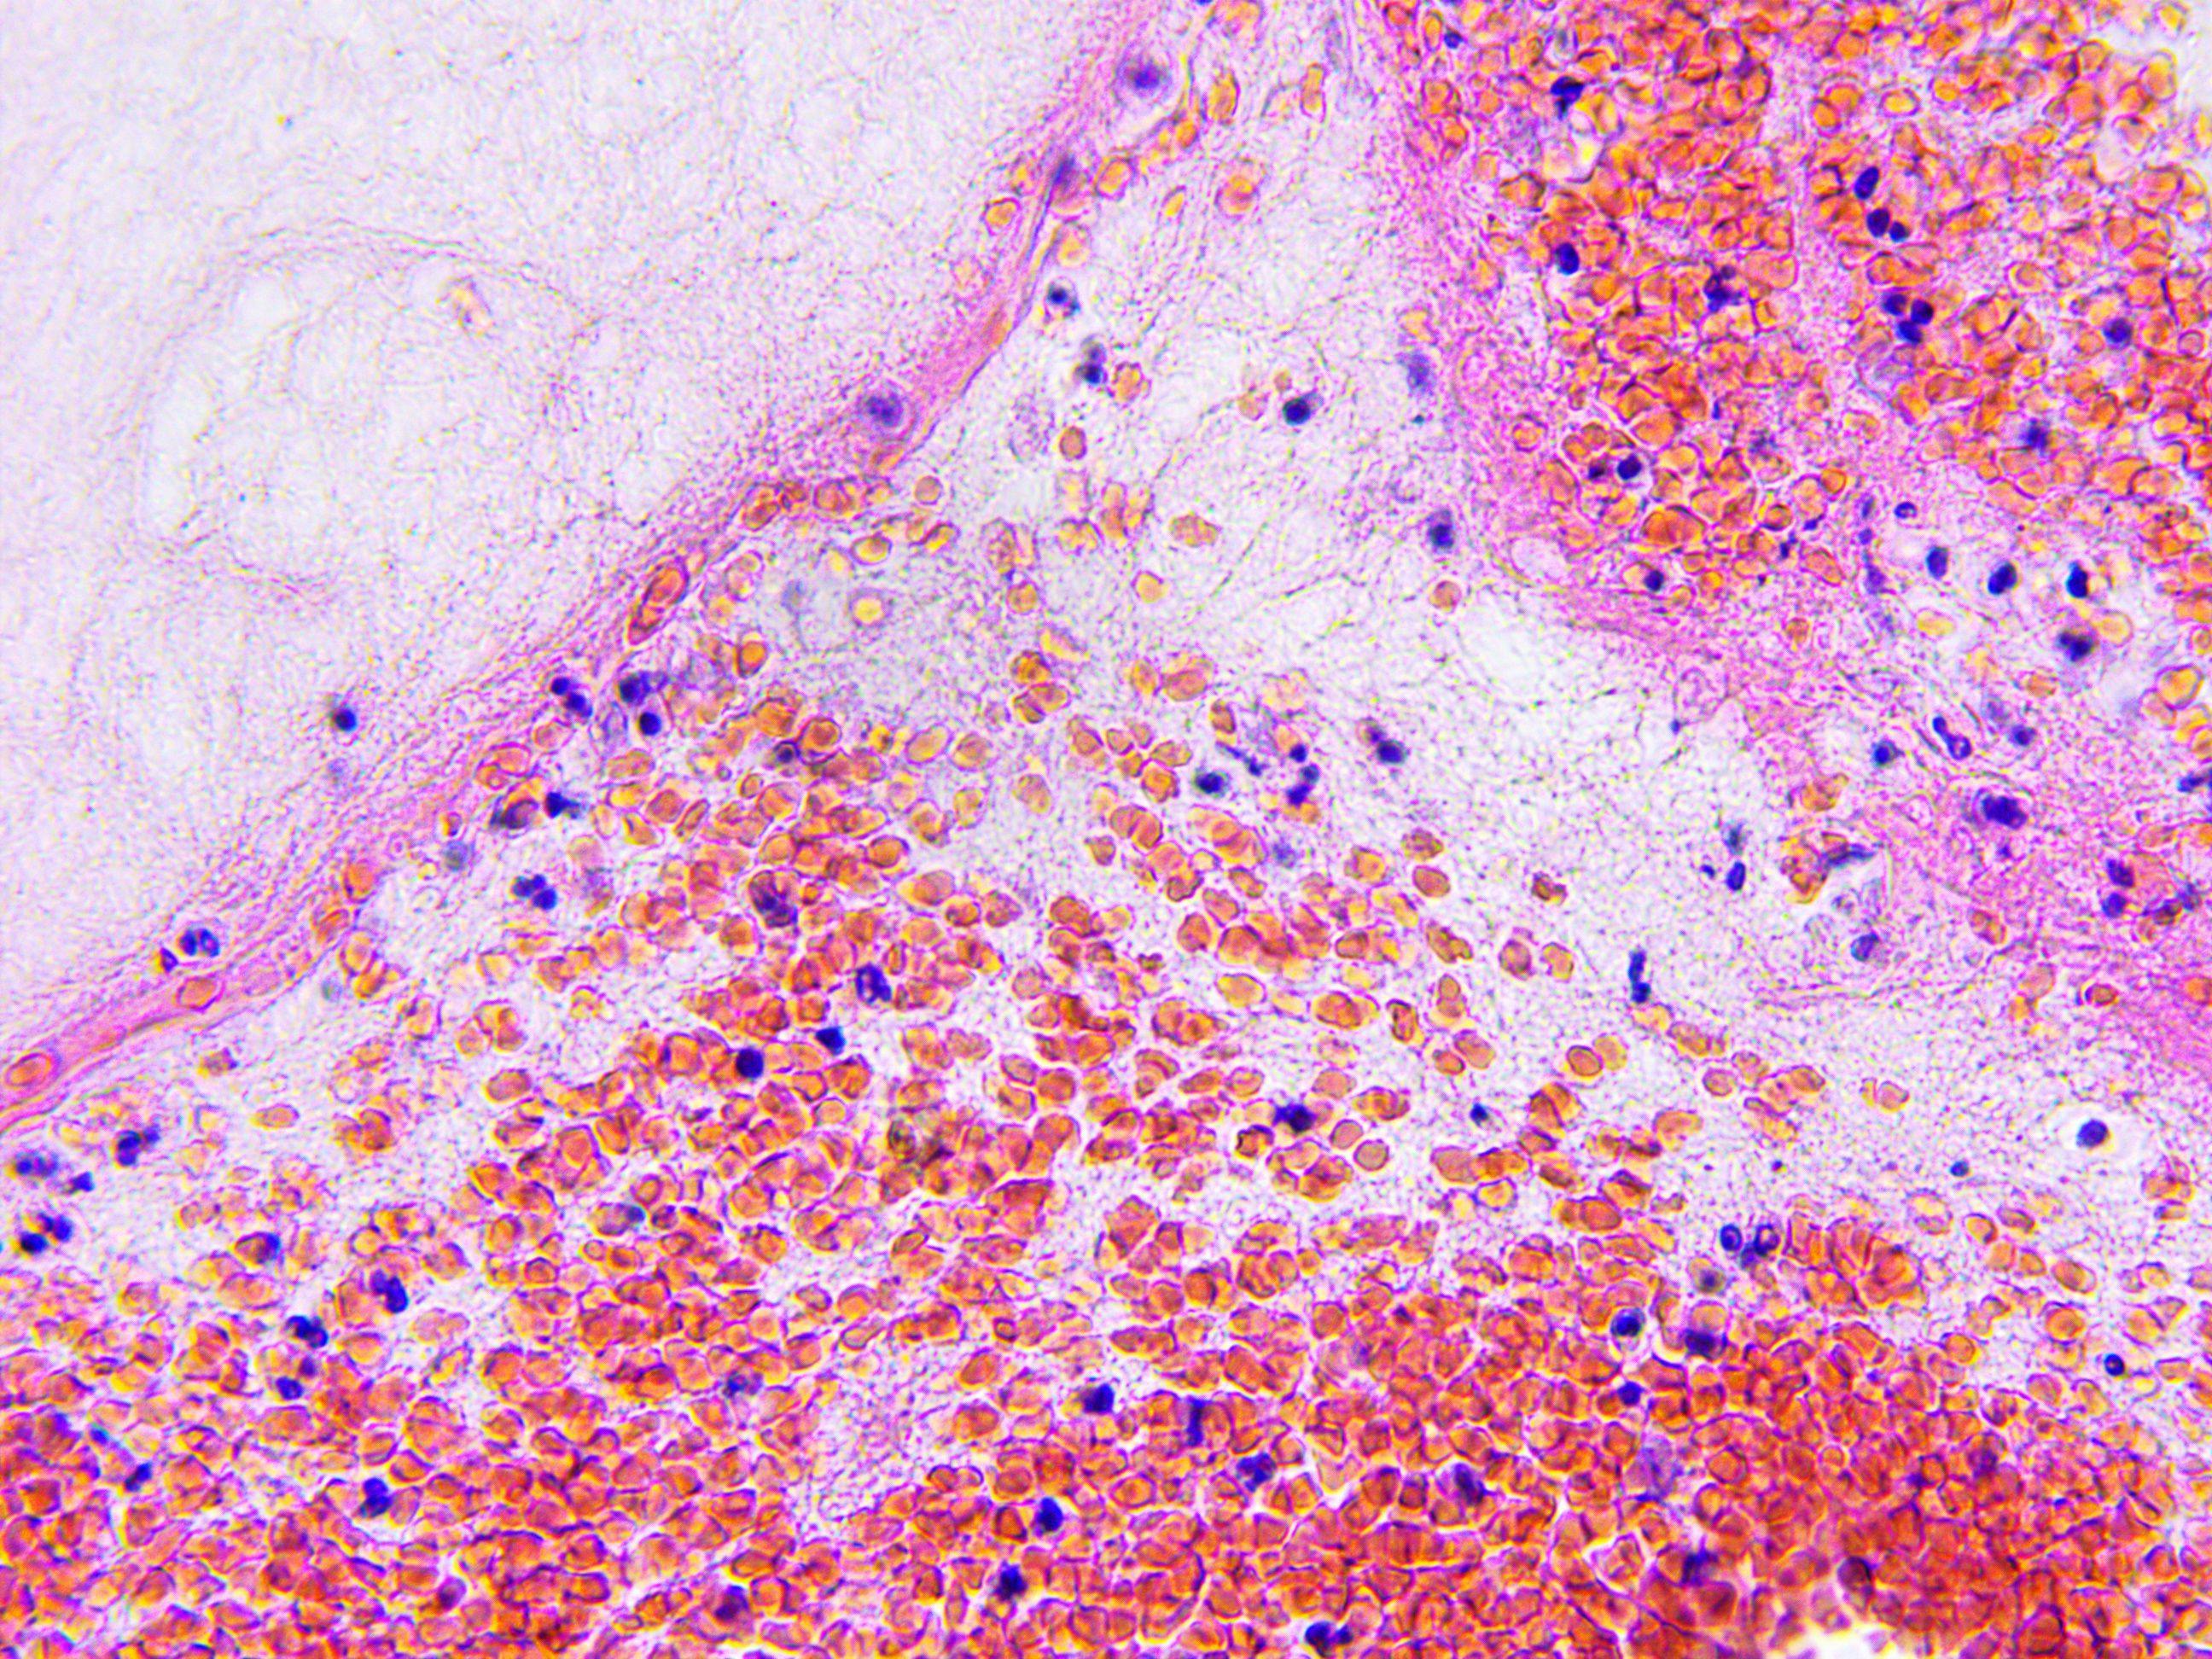 Macroscopic photo of brain tissue: ©lukszczepanski - stock.adobe.com